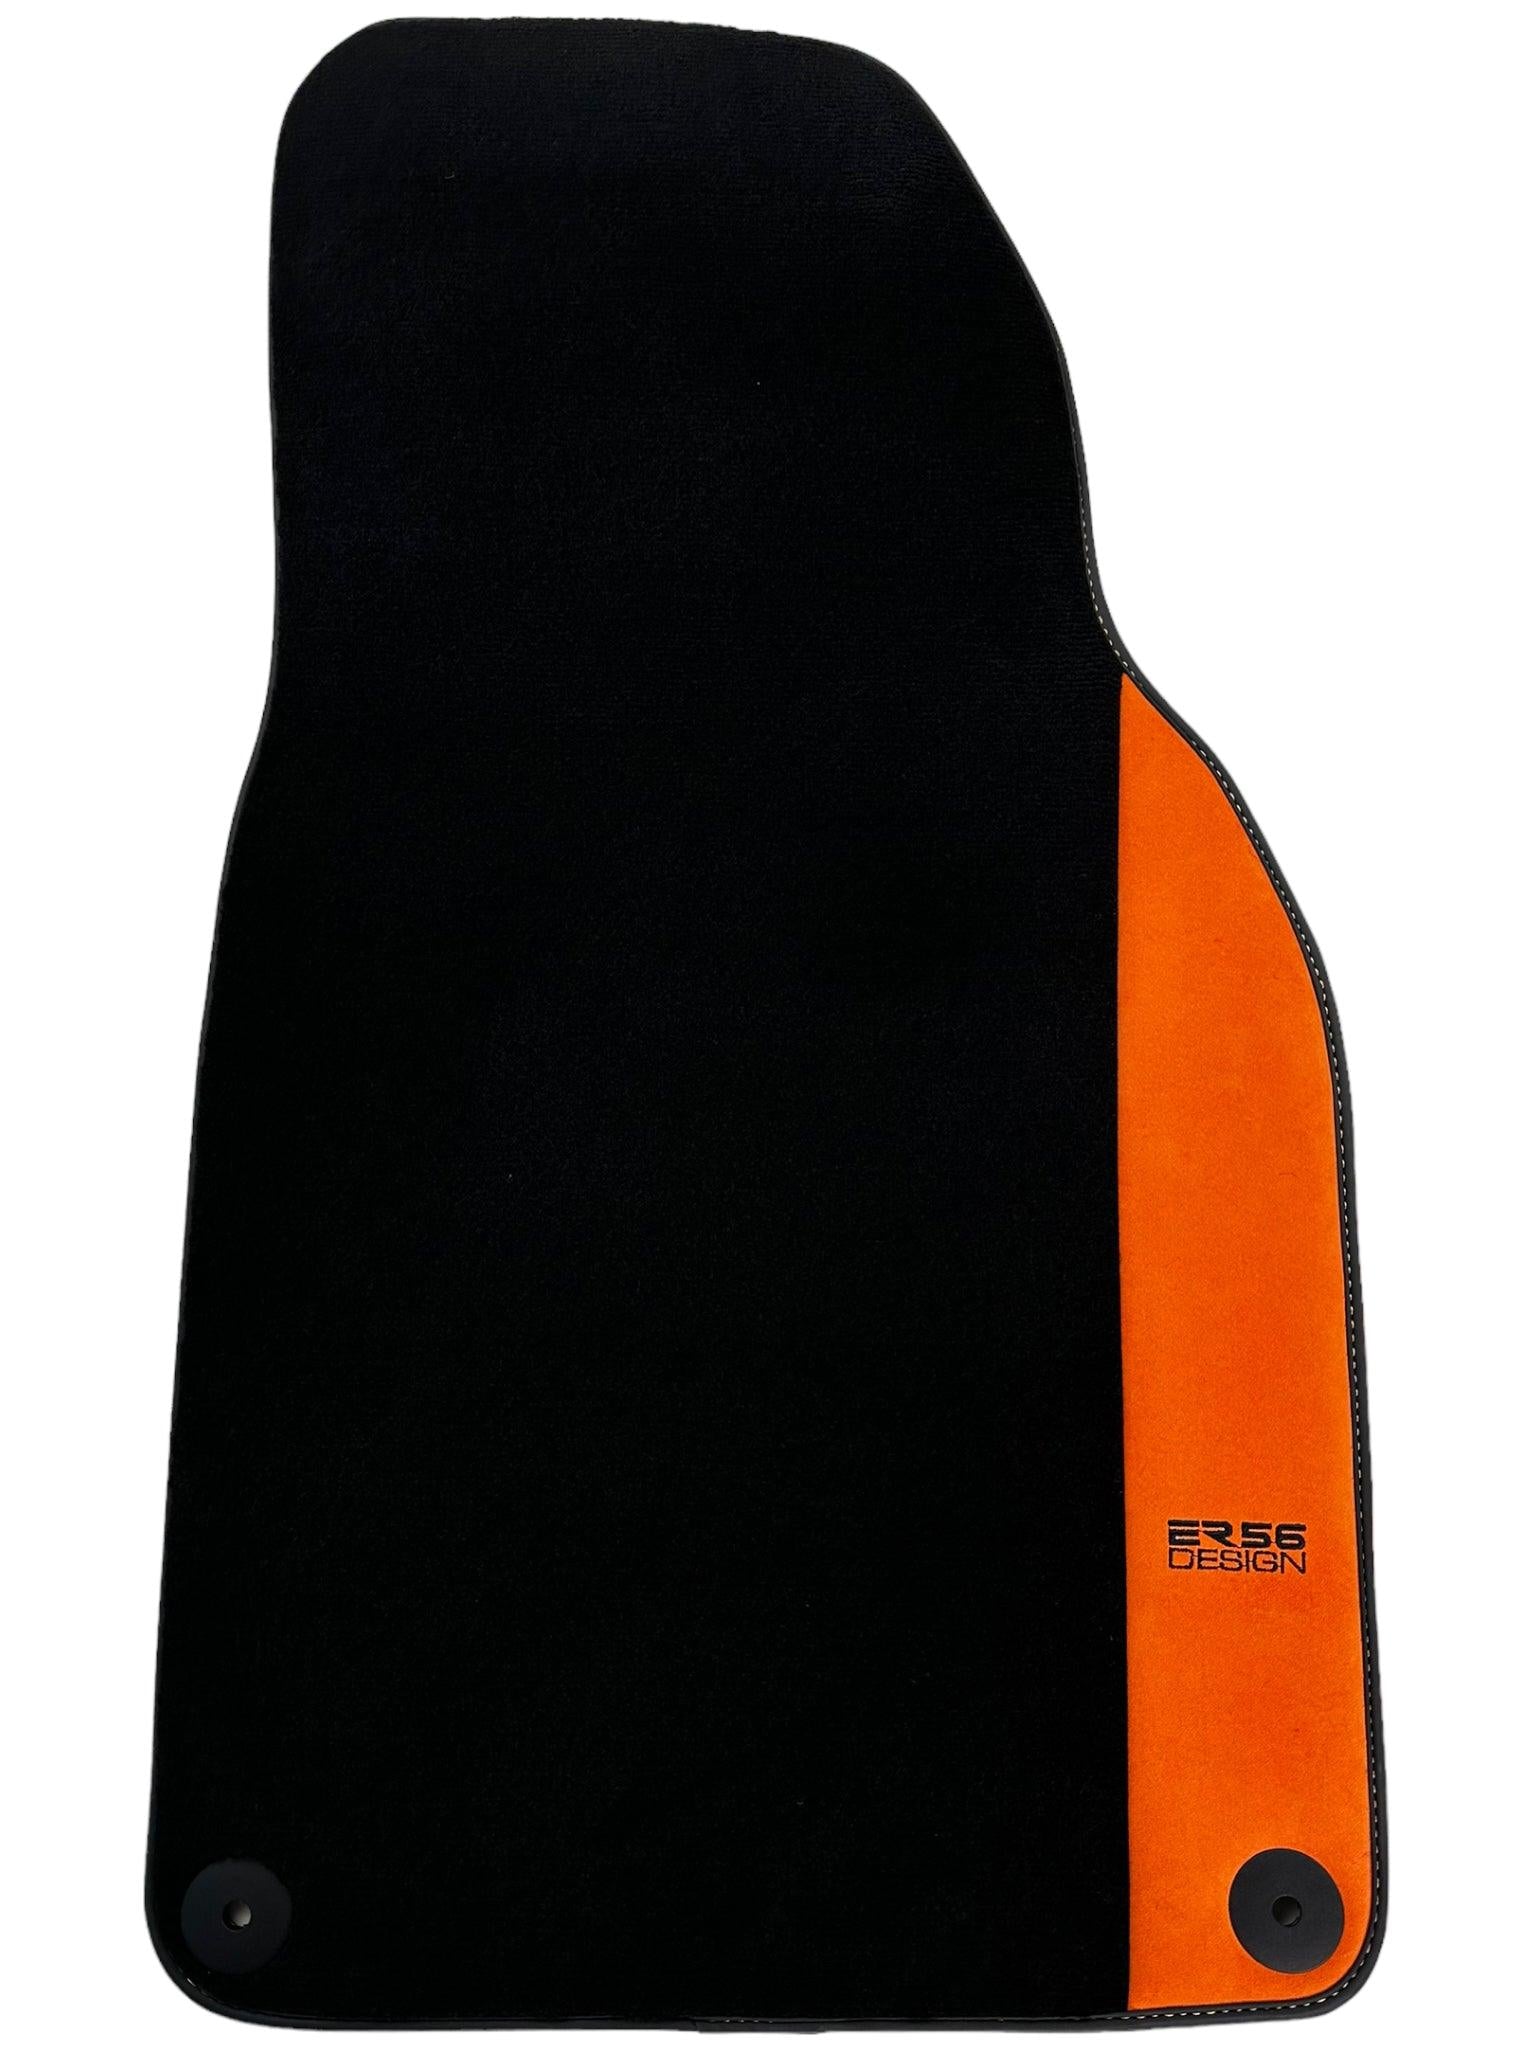 Black Floor Mats for Porsche Taycan (2019-2023) with Orange Alcantara Leather ER56 Design - AutoWin